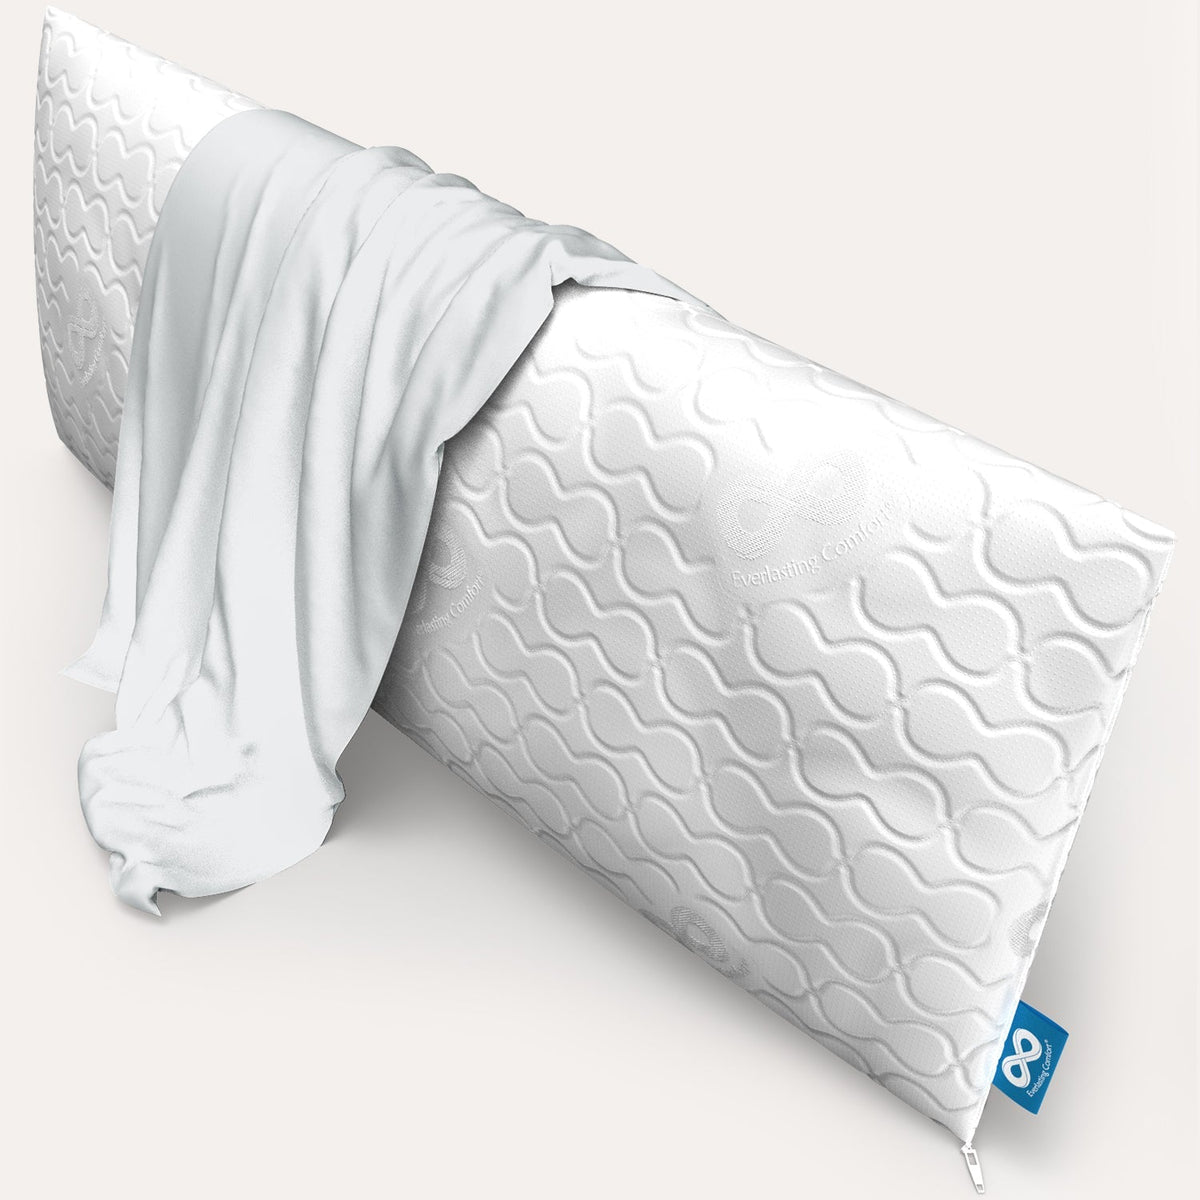 Everlasting Comfort 100% Pure Memory Foam Wedge Seat Cushion, Body